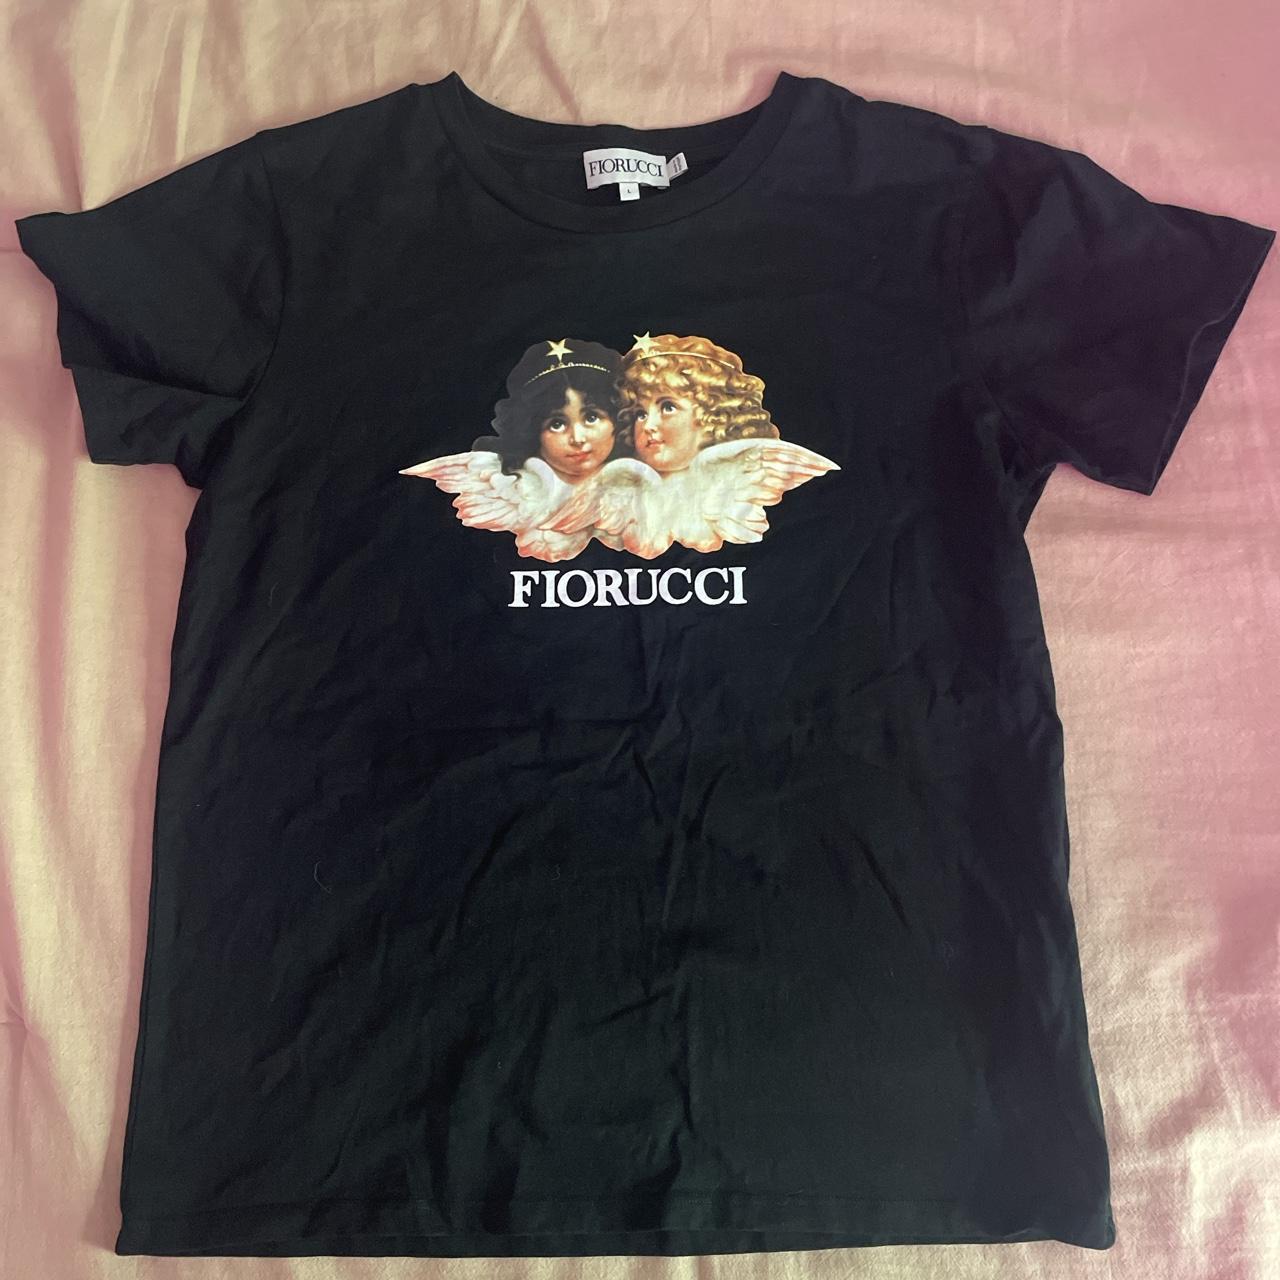 Fiorucci Women's Black and White T-shirt